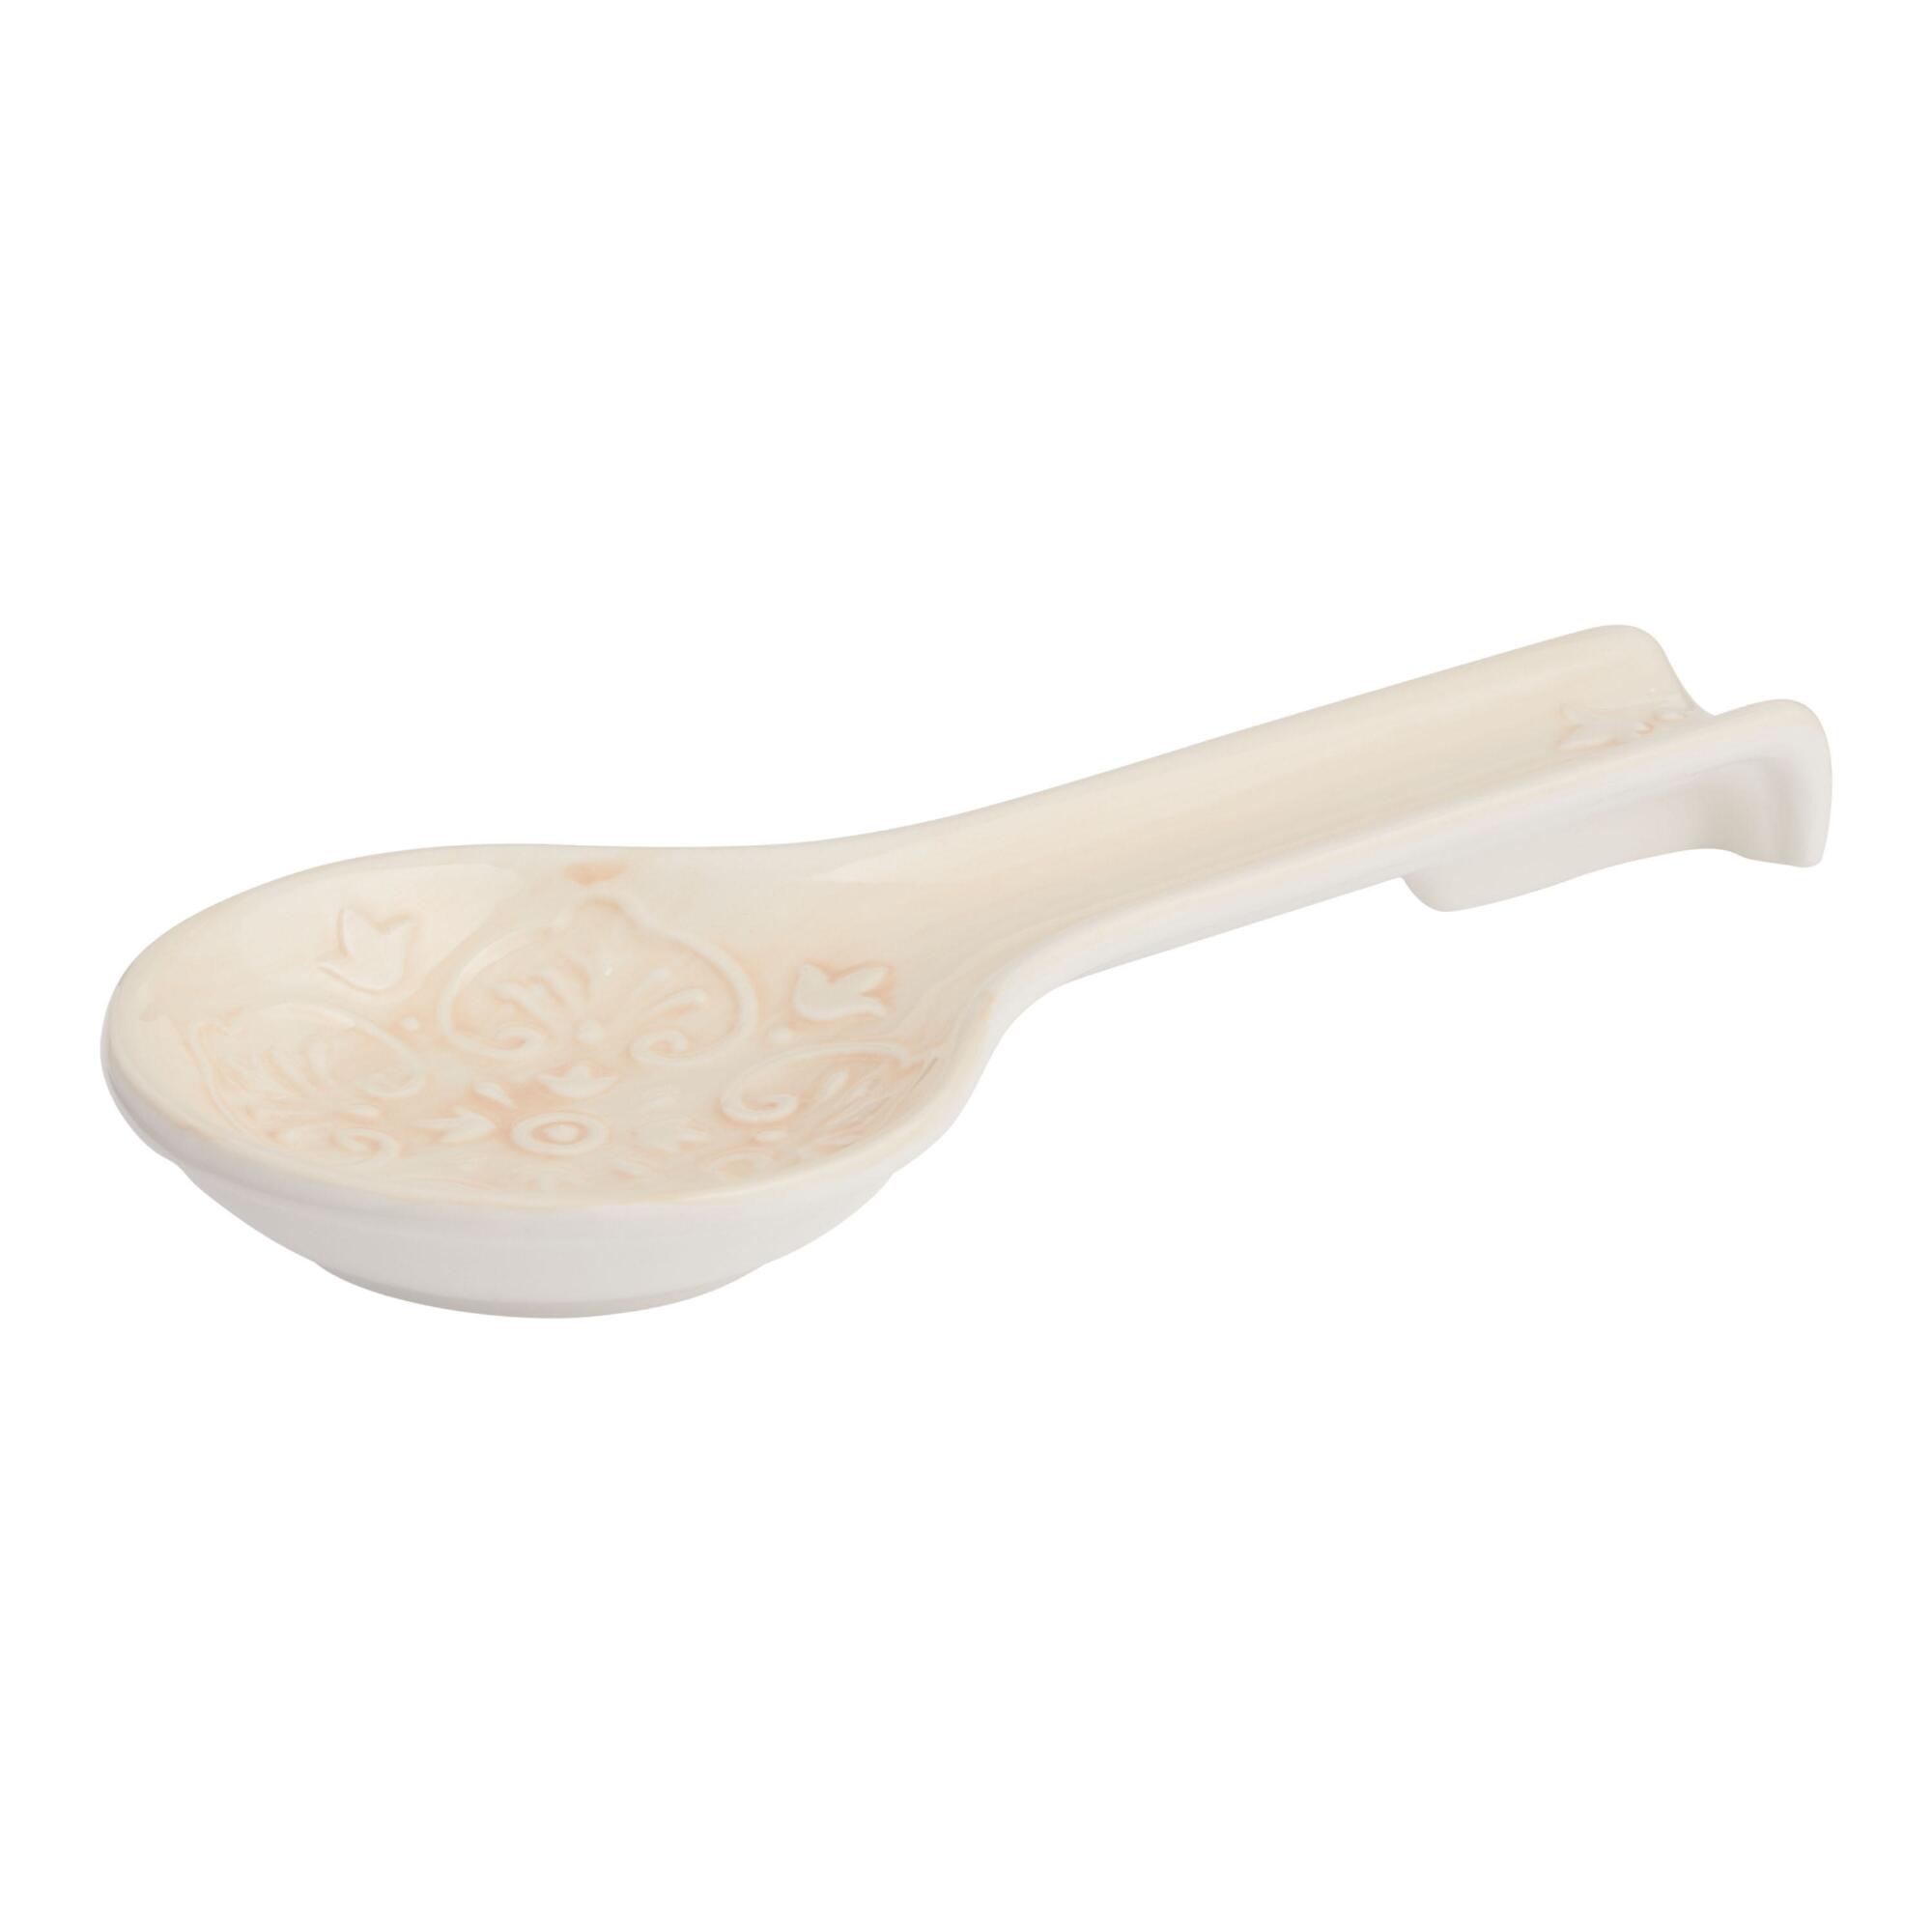 Embossed Ceramic Avellino Spoon Rest: White by World Market